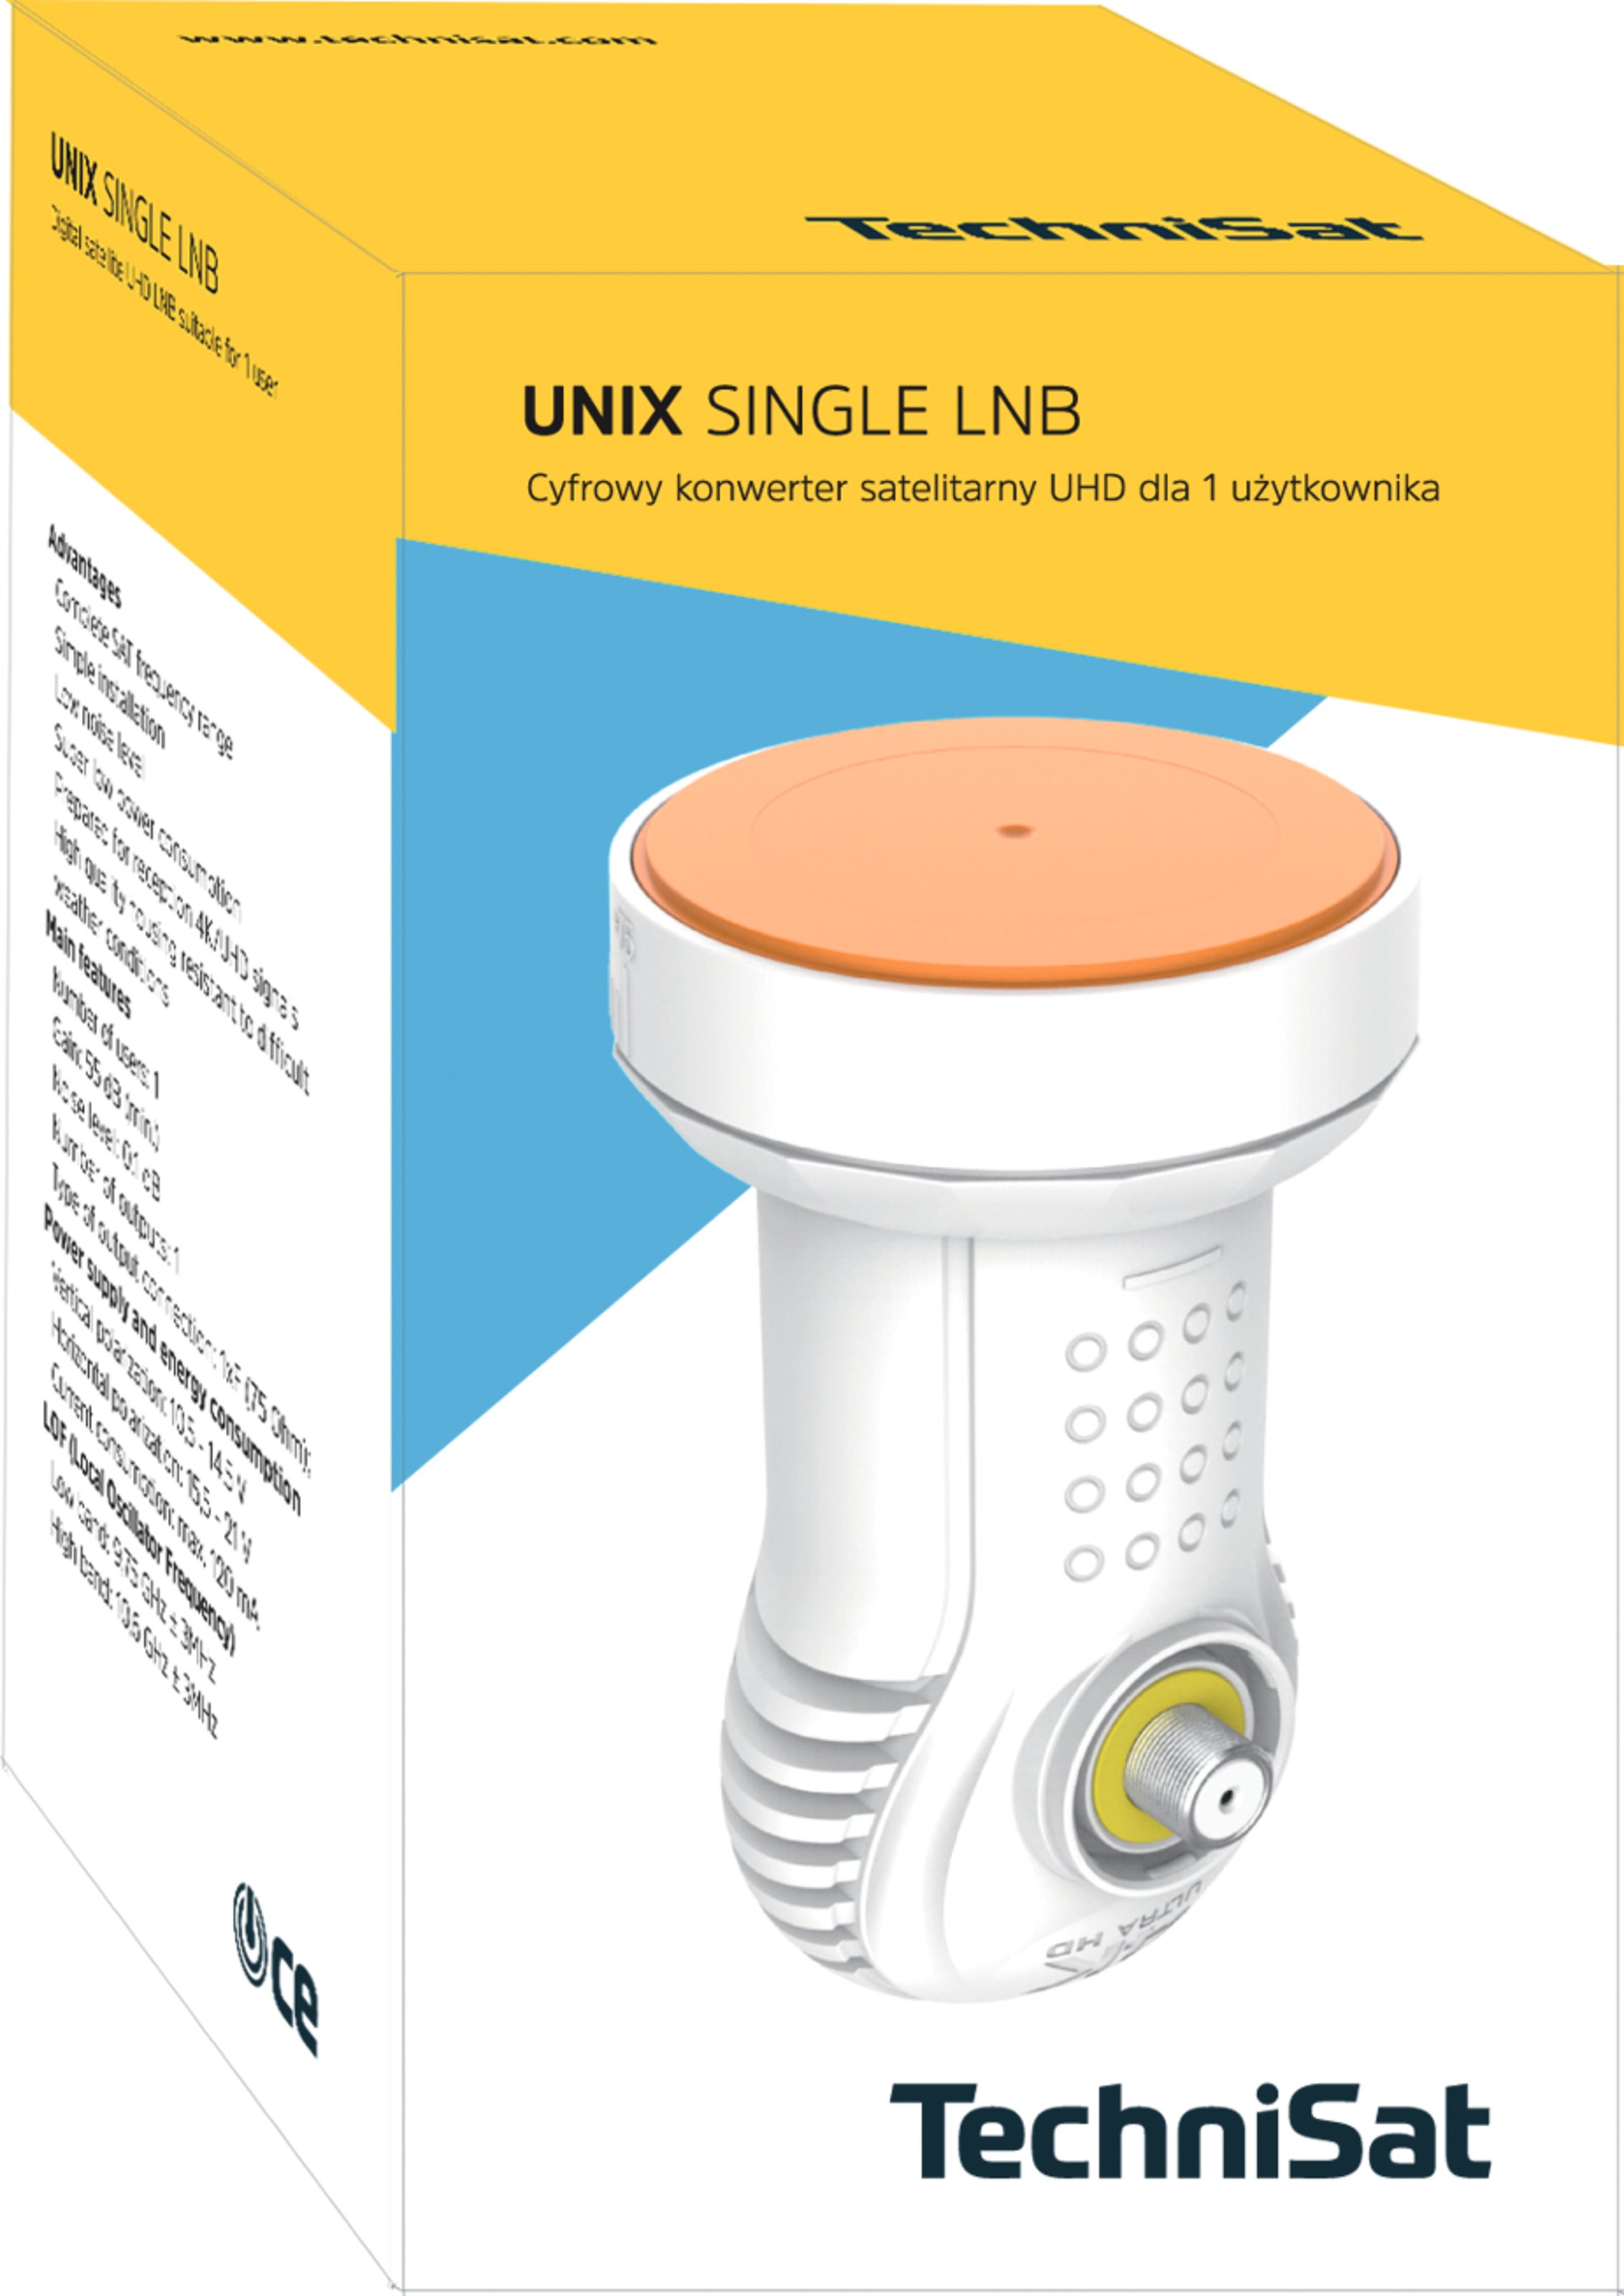 UNIX Single LNB